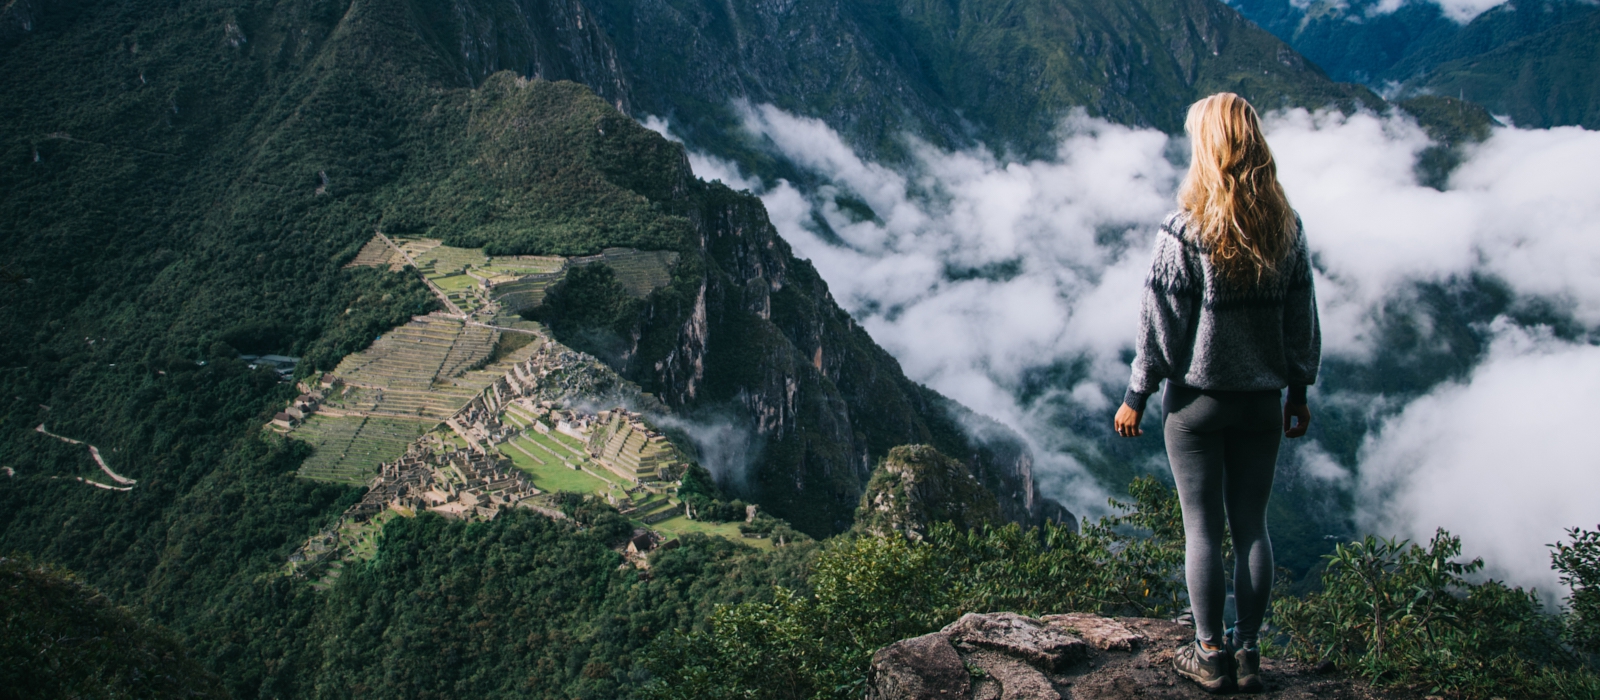 7 Day Trek along the Inca Trail & Machu Picchu